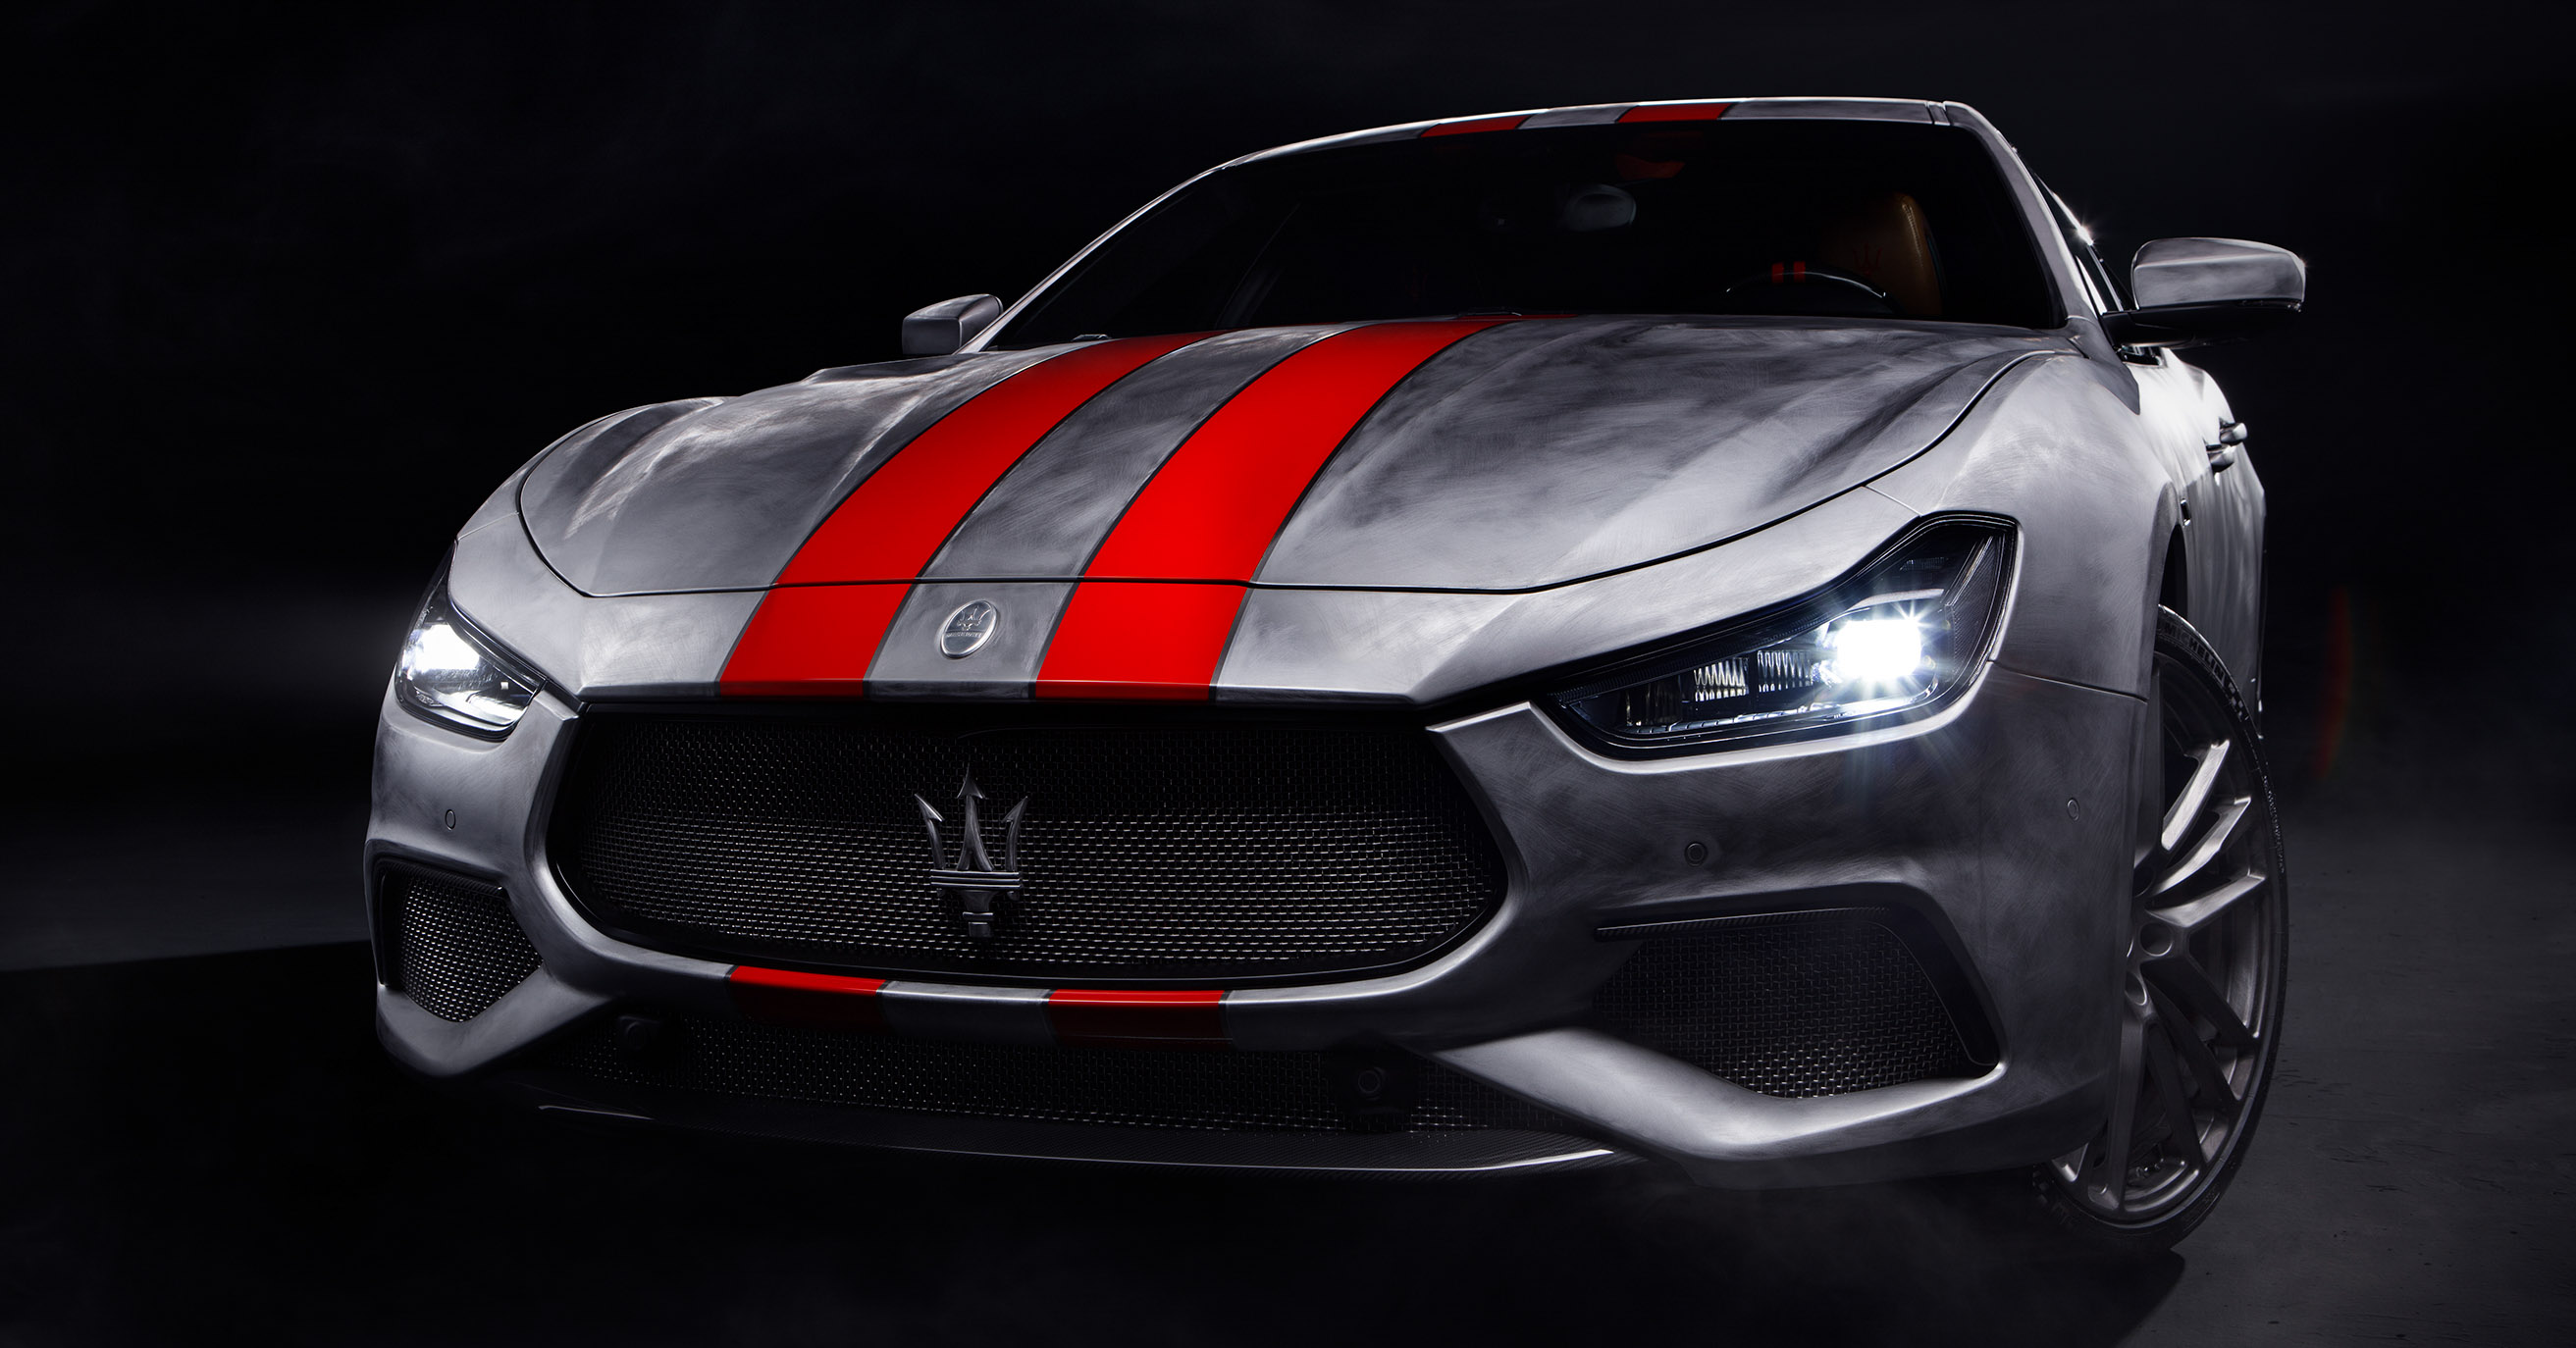 https://s3.paultan.org/image/2020/09/Maserati-Ghibli-Fuoriserie-Corse-3.jpg